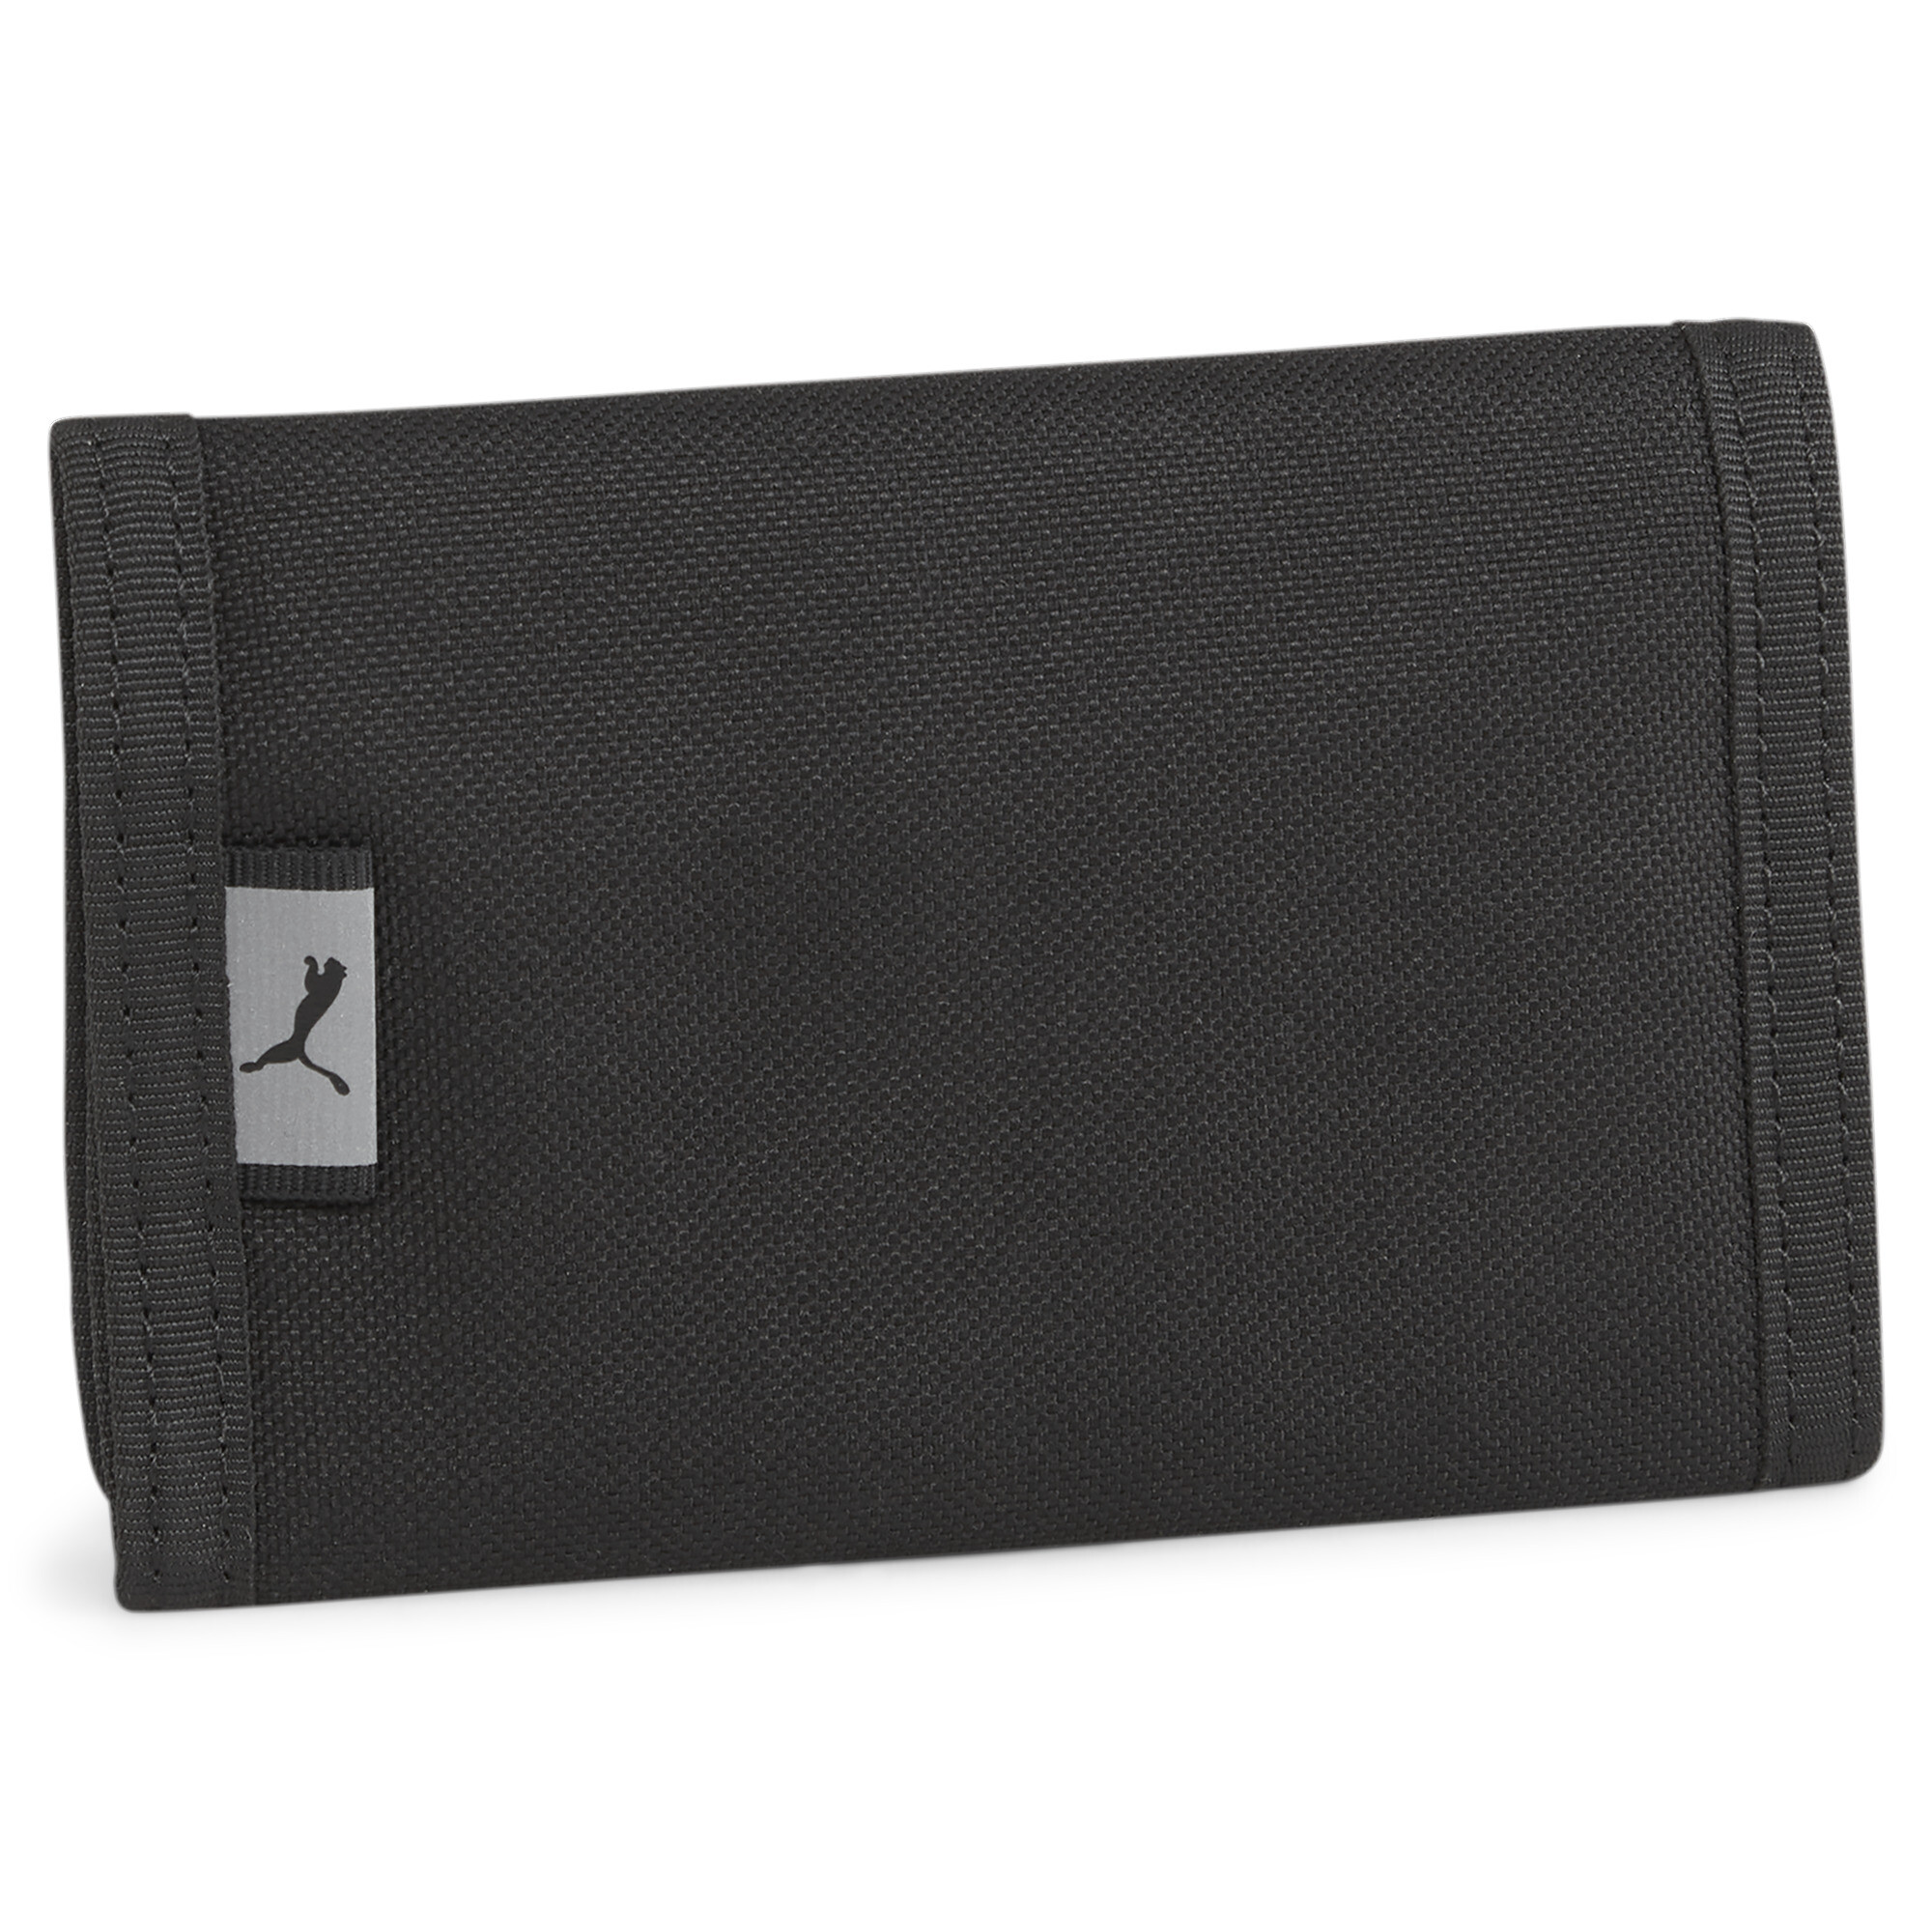 Puma Plus Wallet, Black, Accessories